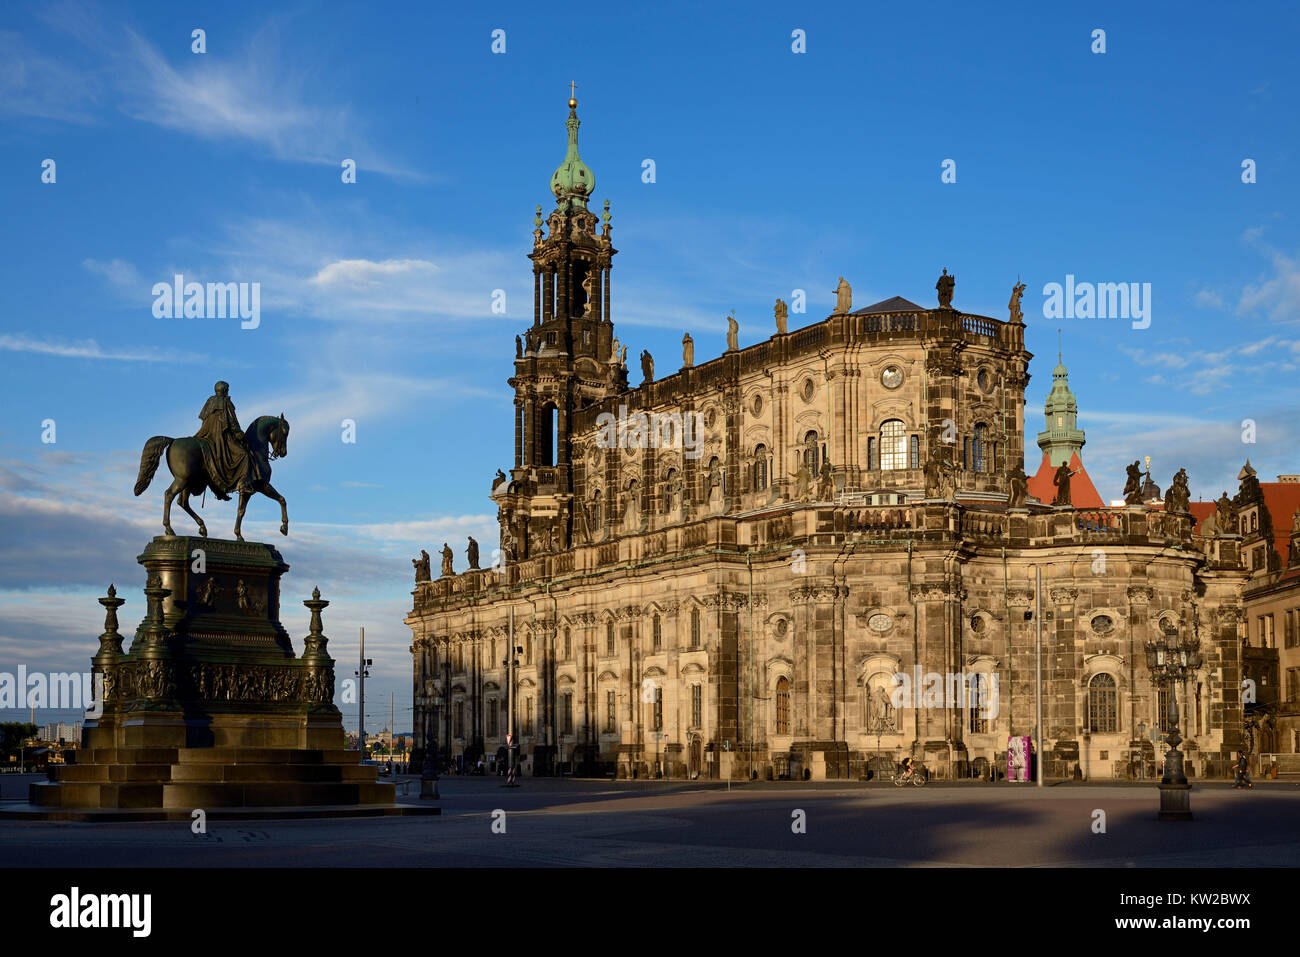 A Dresda, la piazza del teatro, monumento re Johann e Cattedrale di Saint Trinitati, Theaterplatz, Denkmal König Johann und Kathedrale St Trinitatis Foto Stock